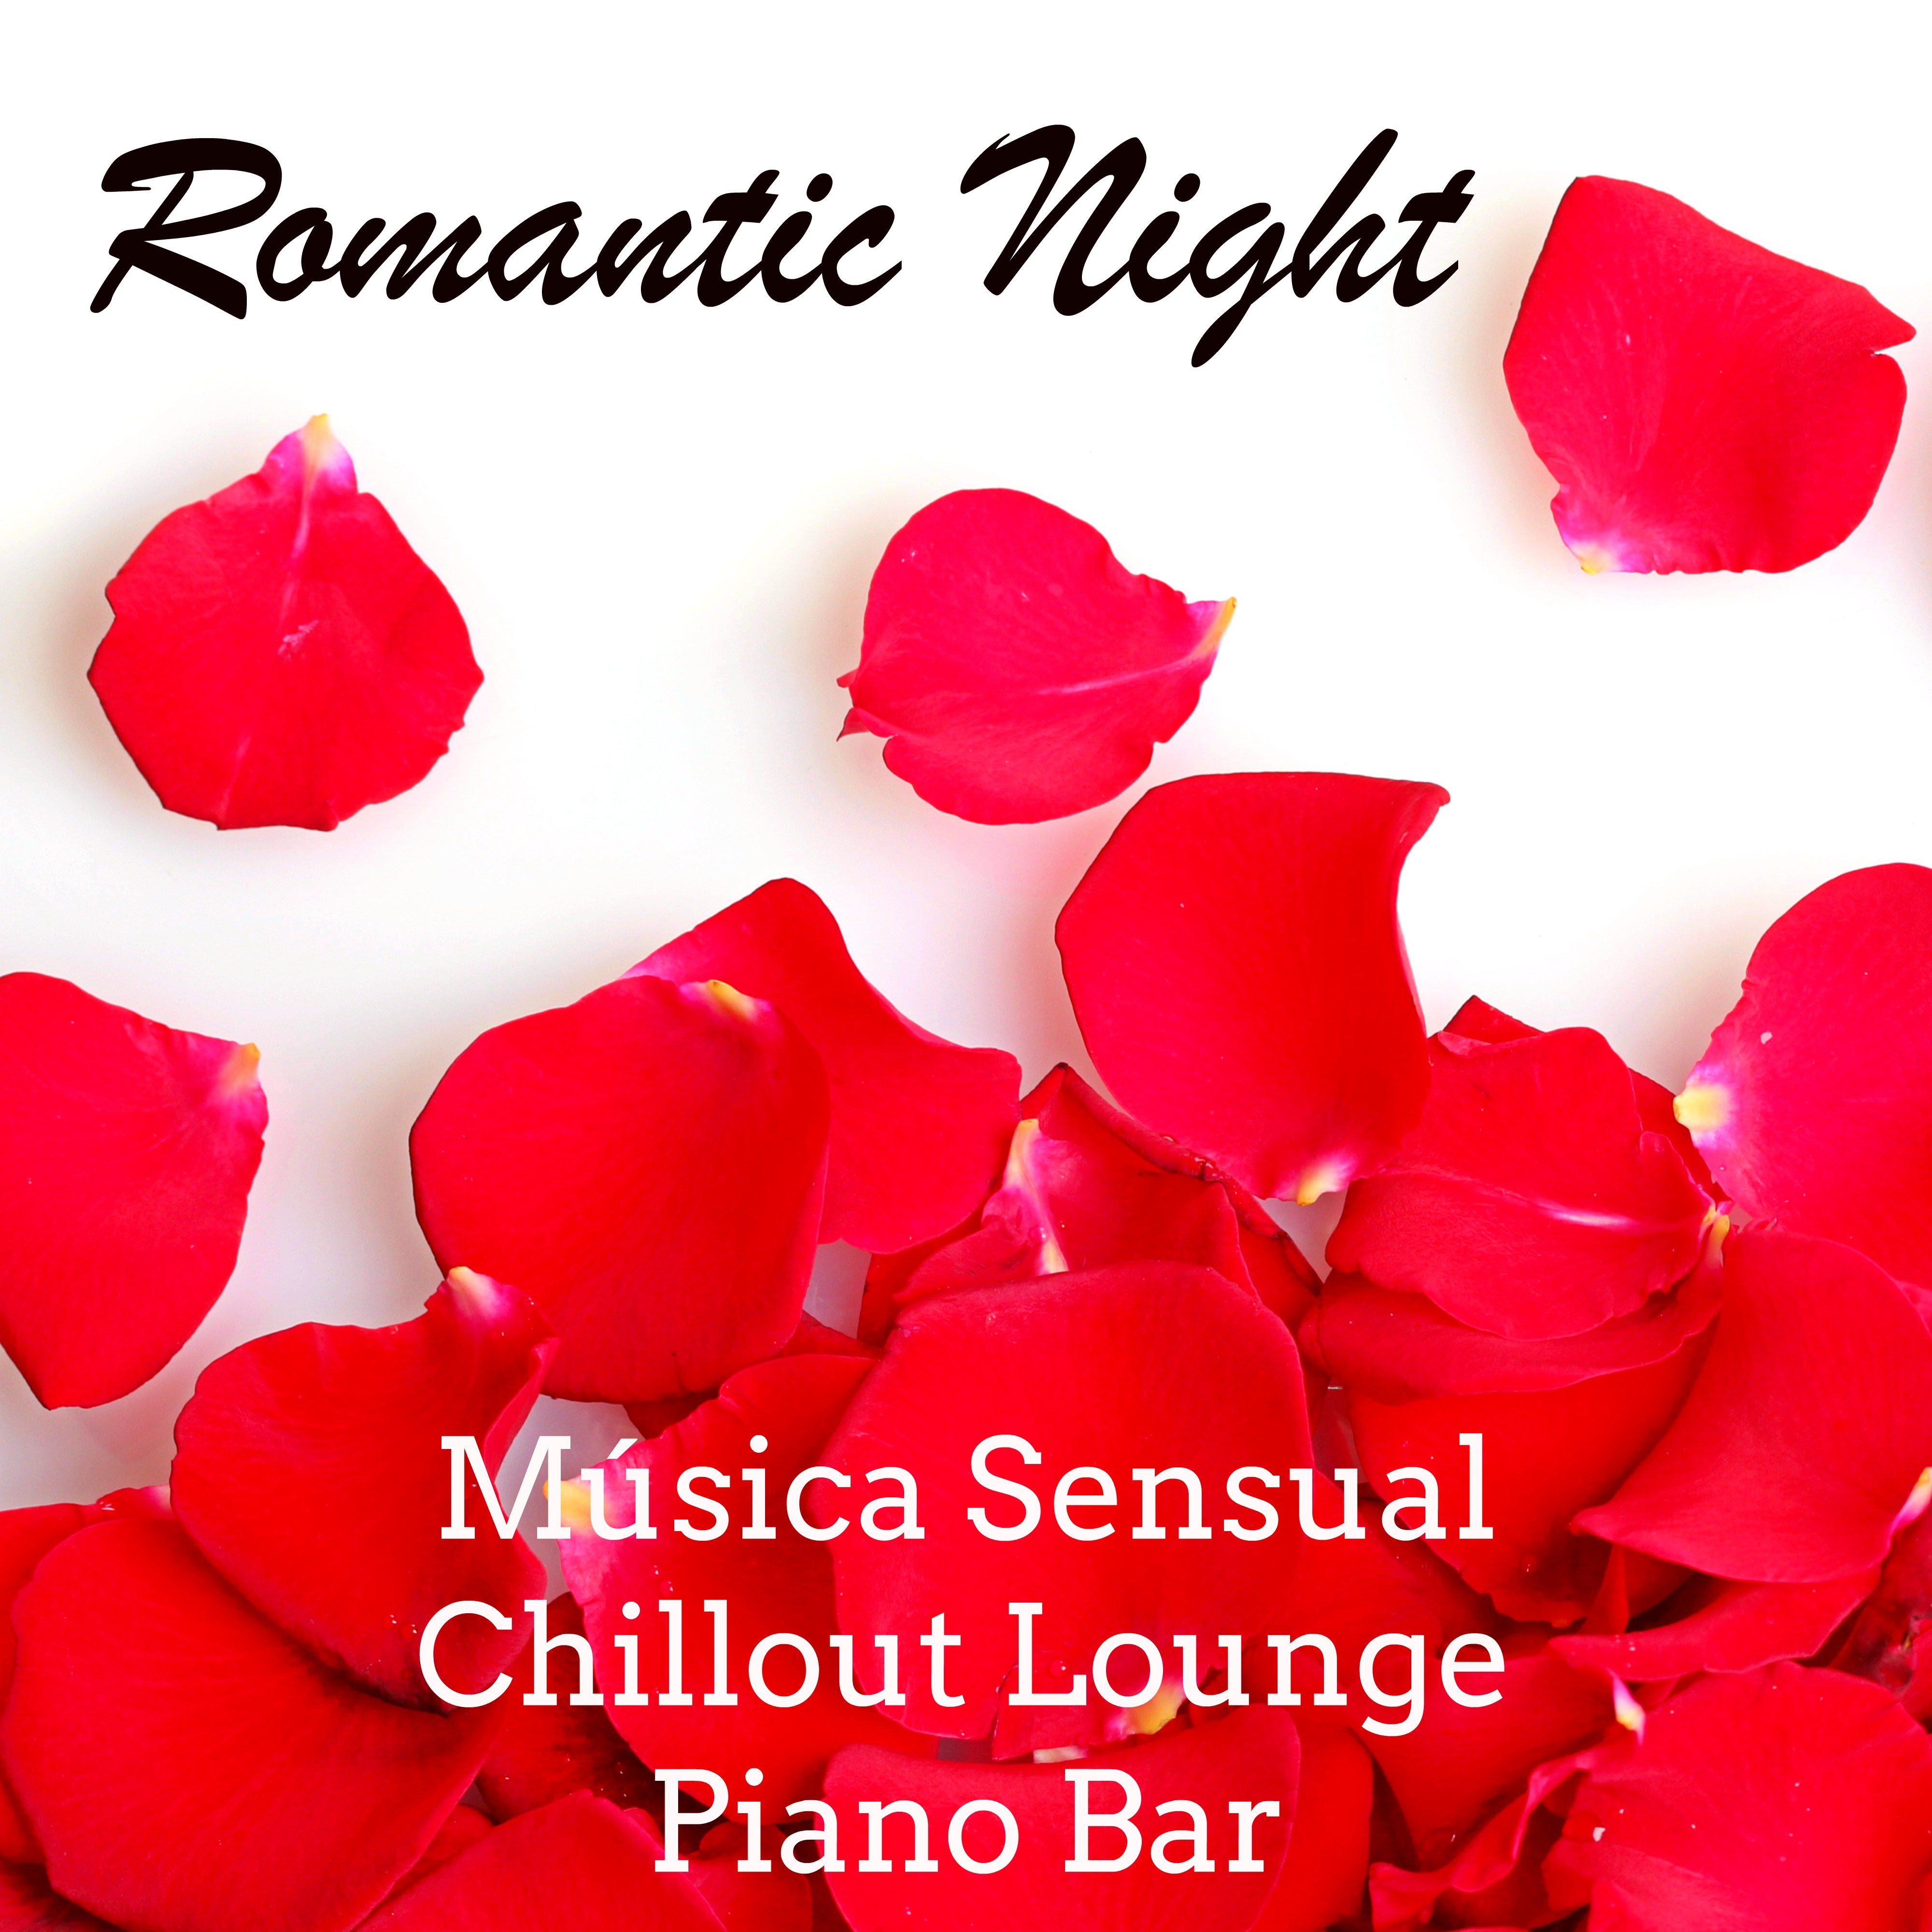 Romantic Night  Mu sica Sensual Chillout Lounge Piano Bar para Dulces Sue os Amor